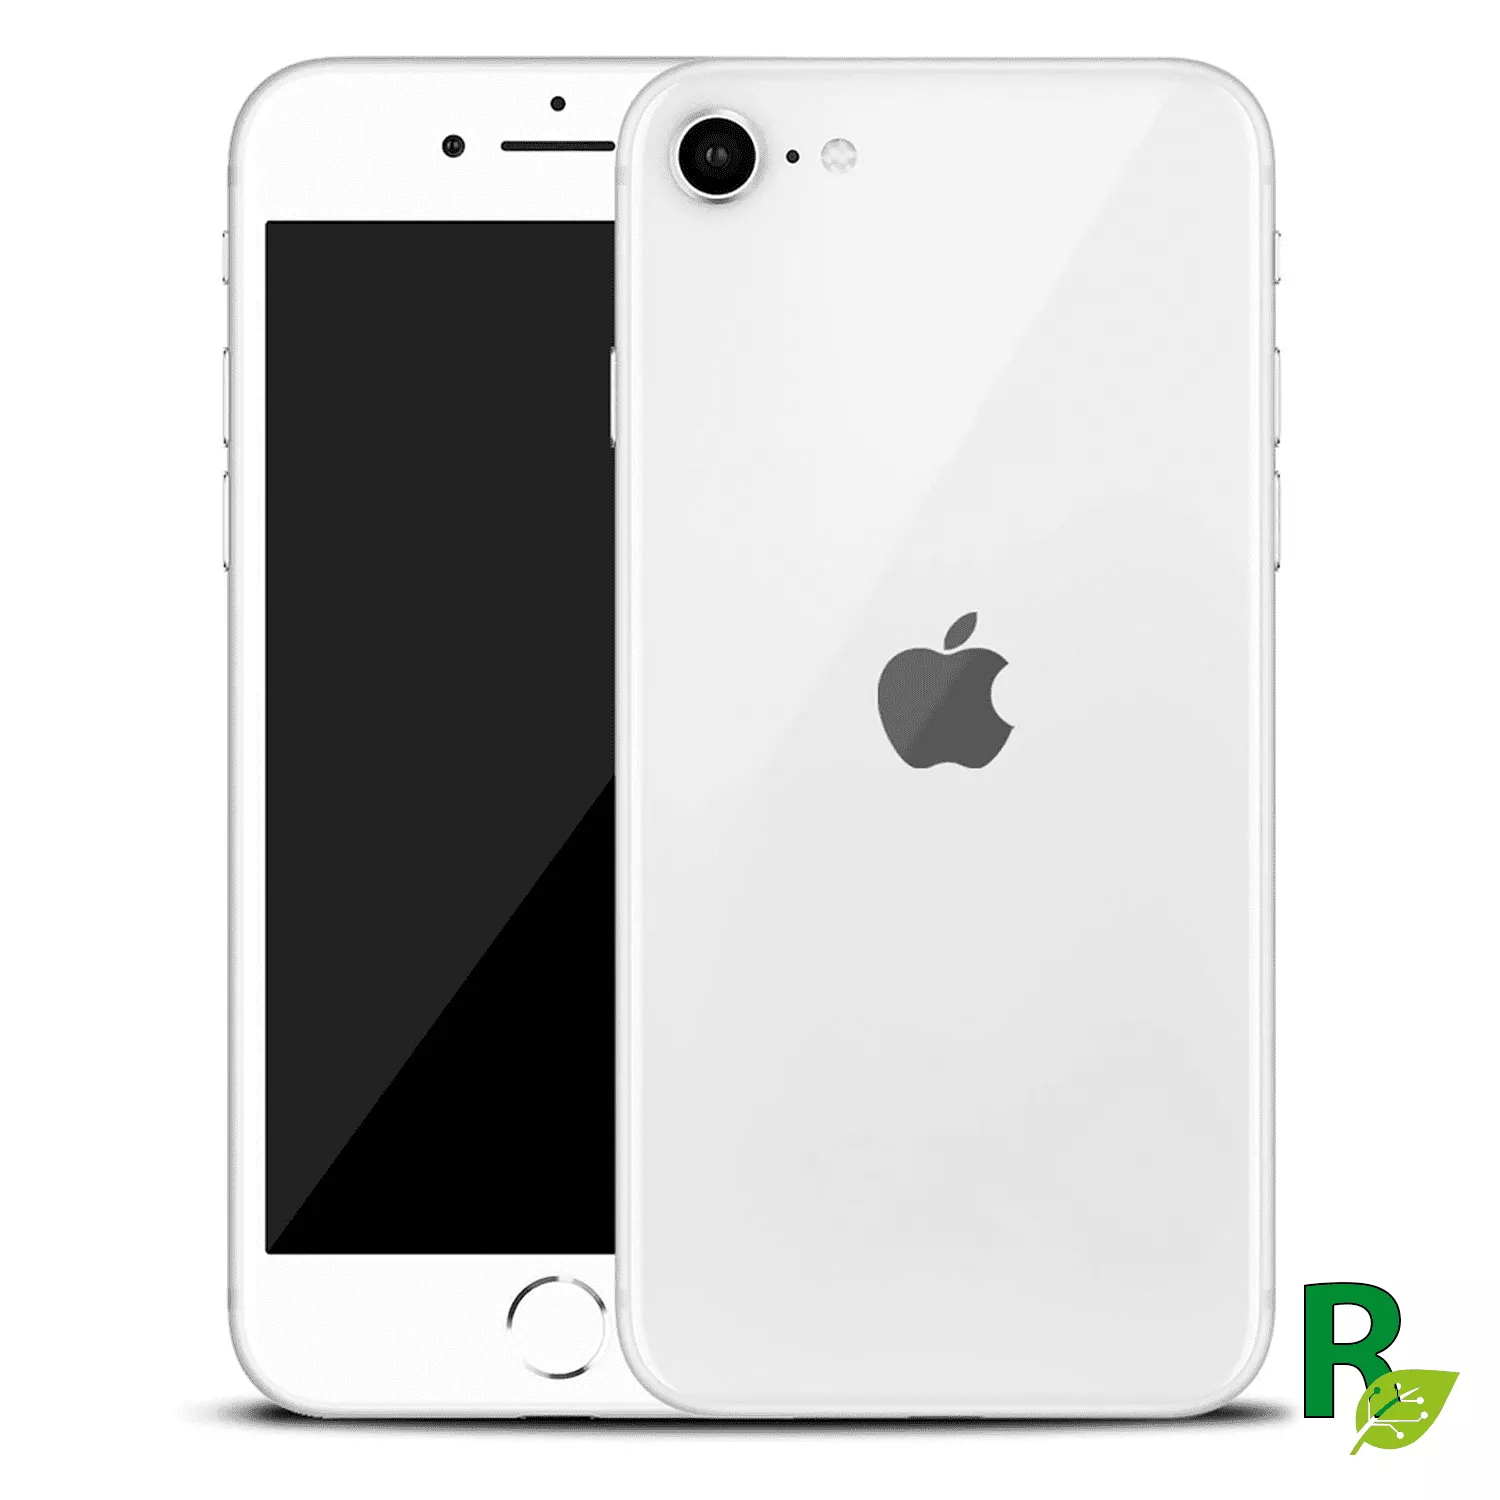 IPhone SE (2nd Gen)  256GB White Grado AB- SE2NDGENWHITEA256-Reacondicionado